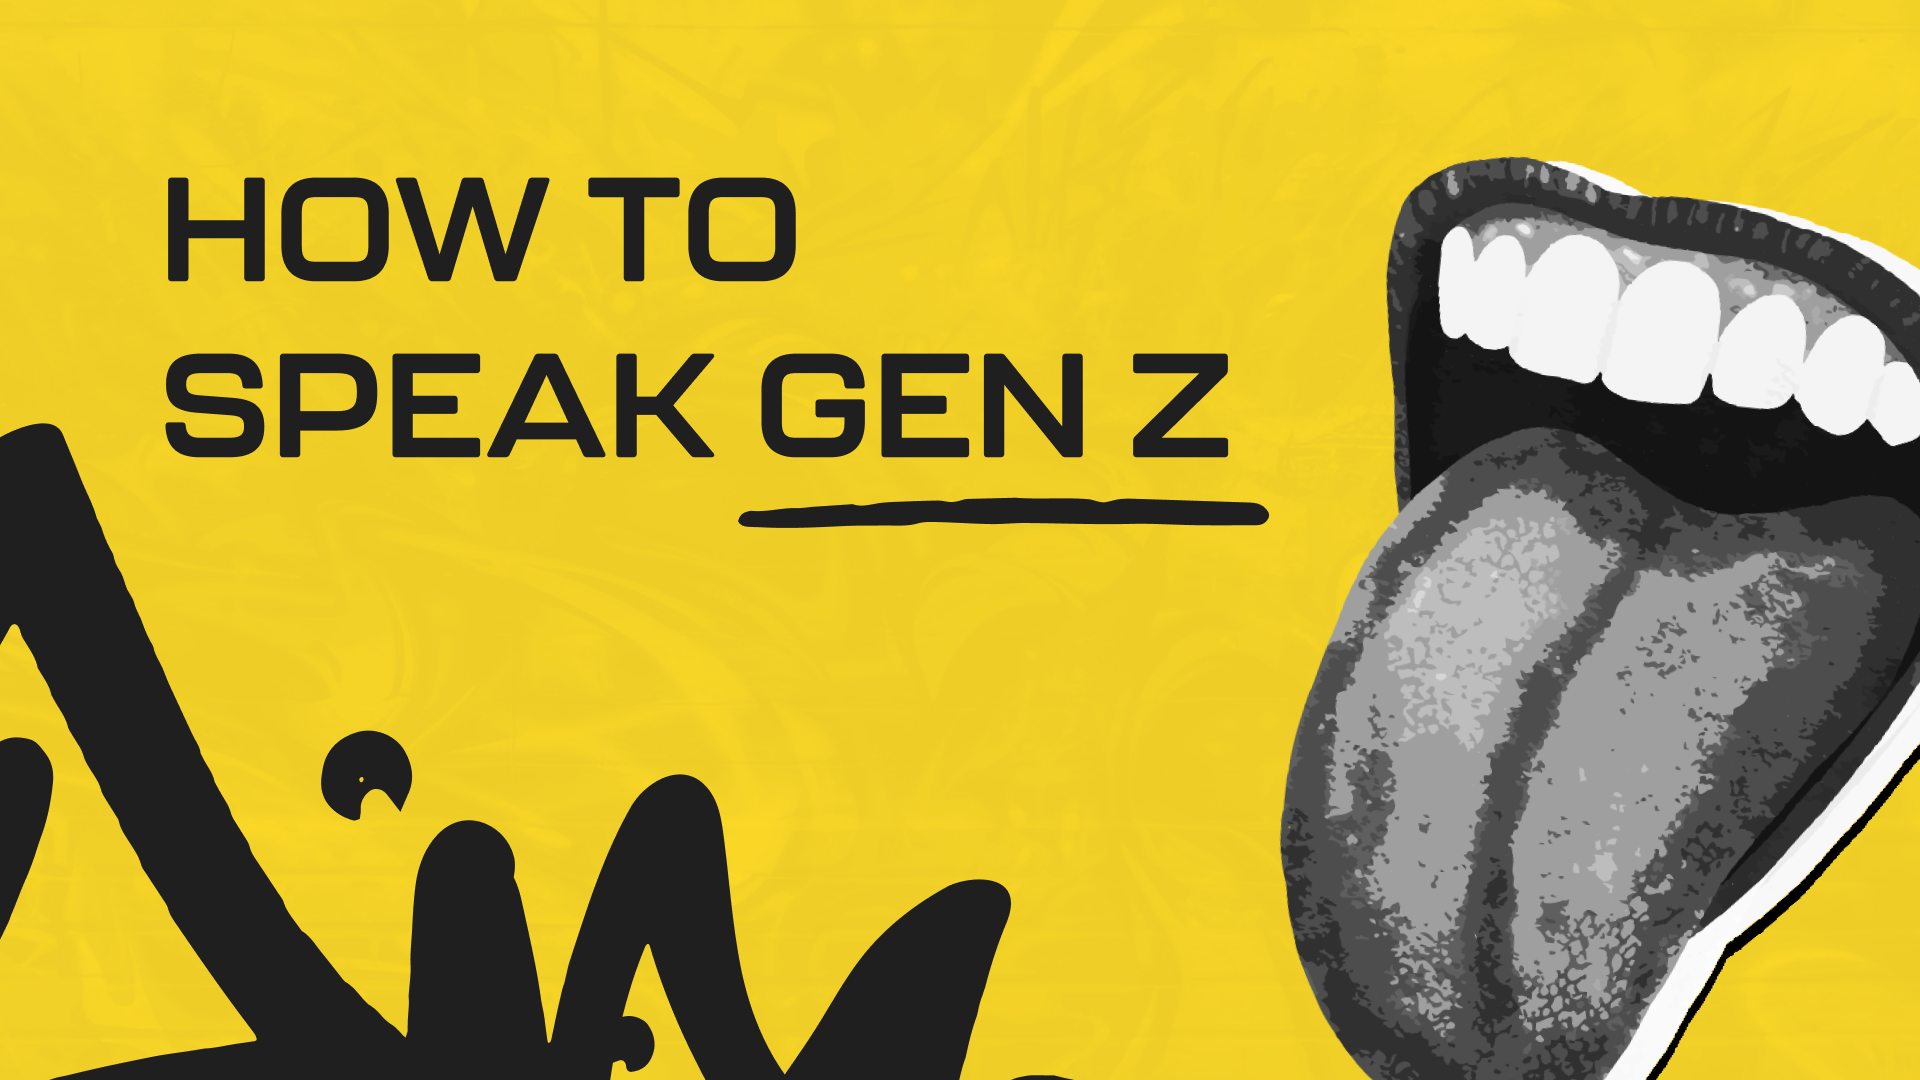 How to speak Gen Z: The ultimate slang word list revealed